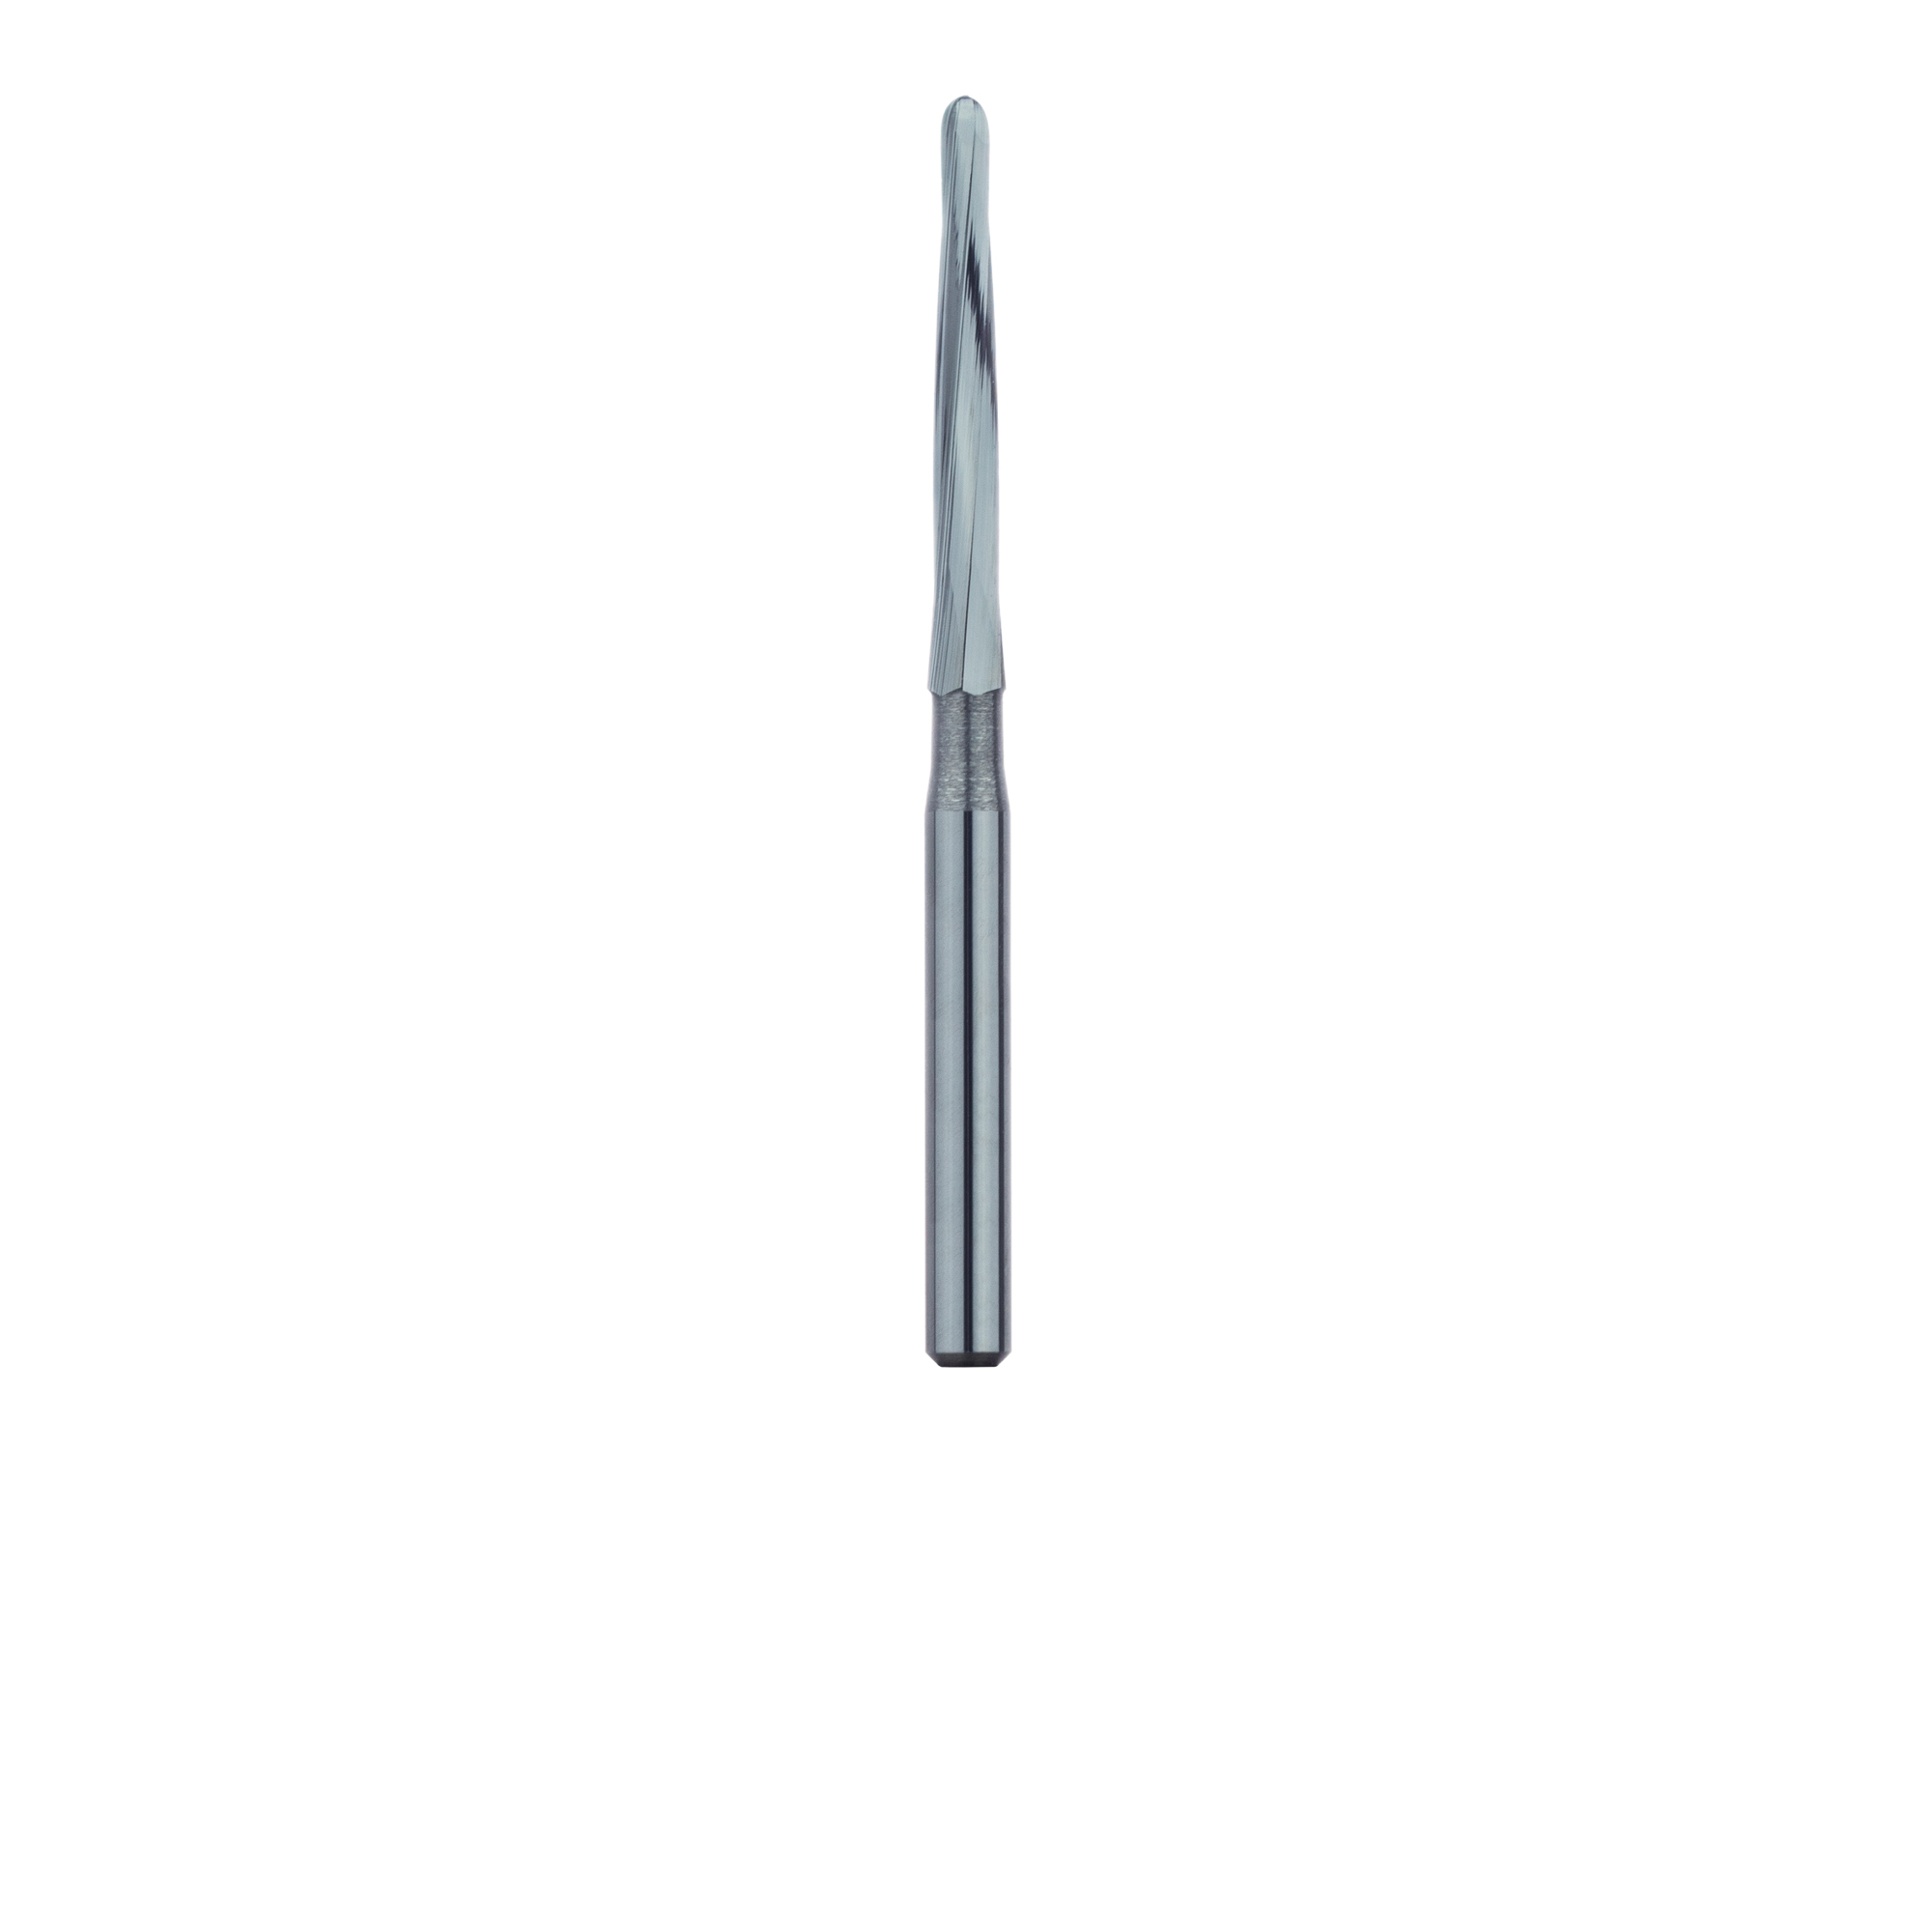 HM151-016-SU Surgical Lindemann Carbide Bur, Non-Cross Cut, 1.6mm Ø, SU